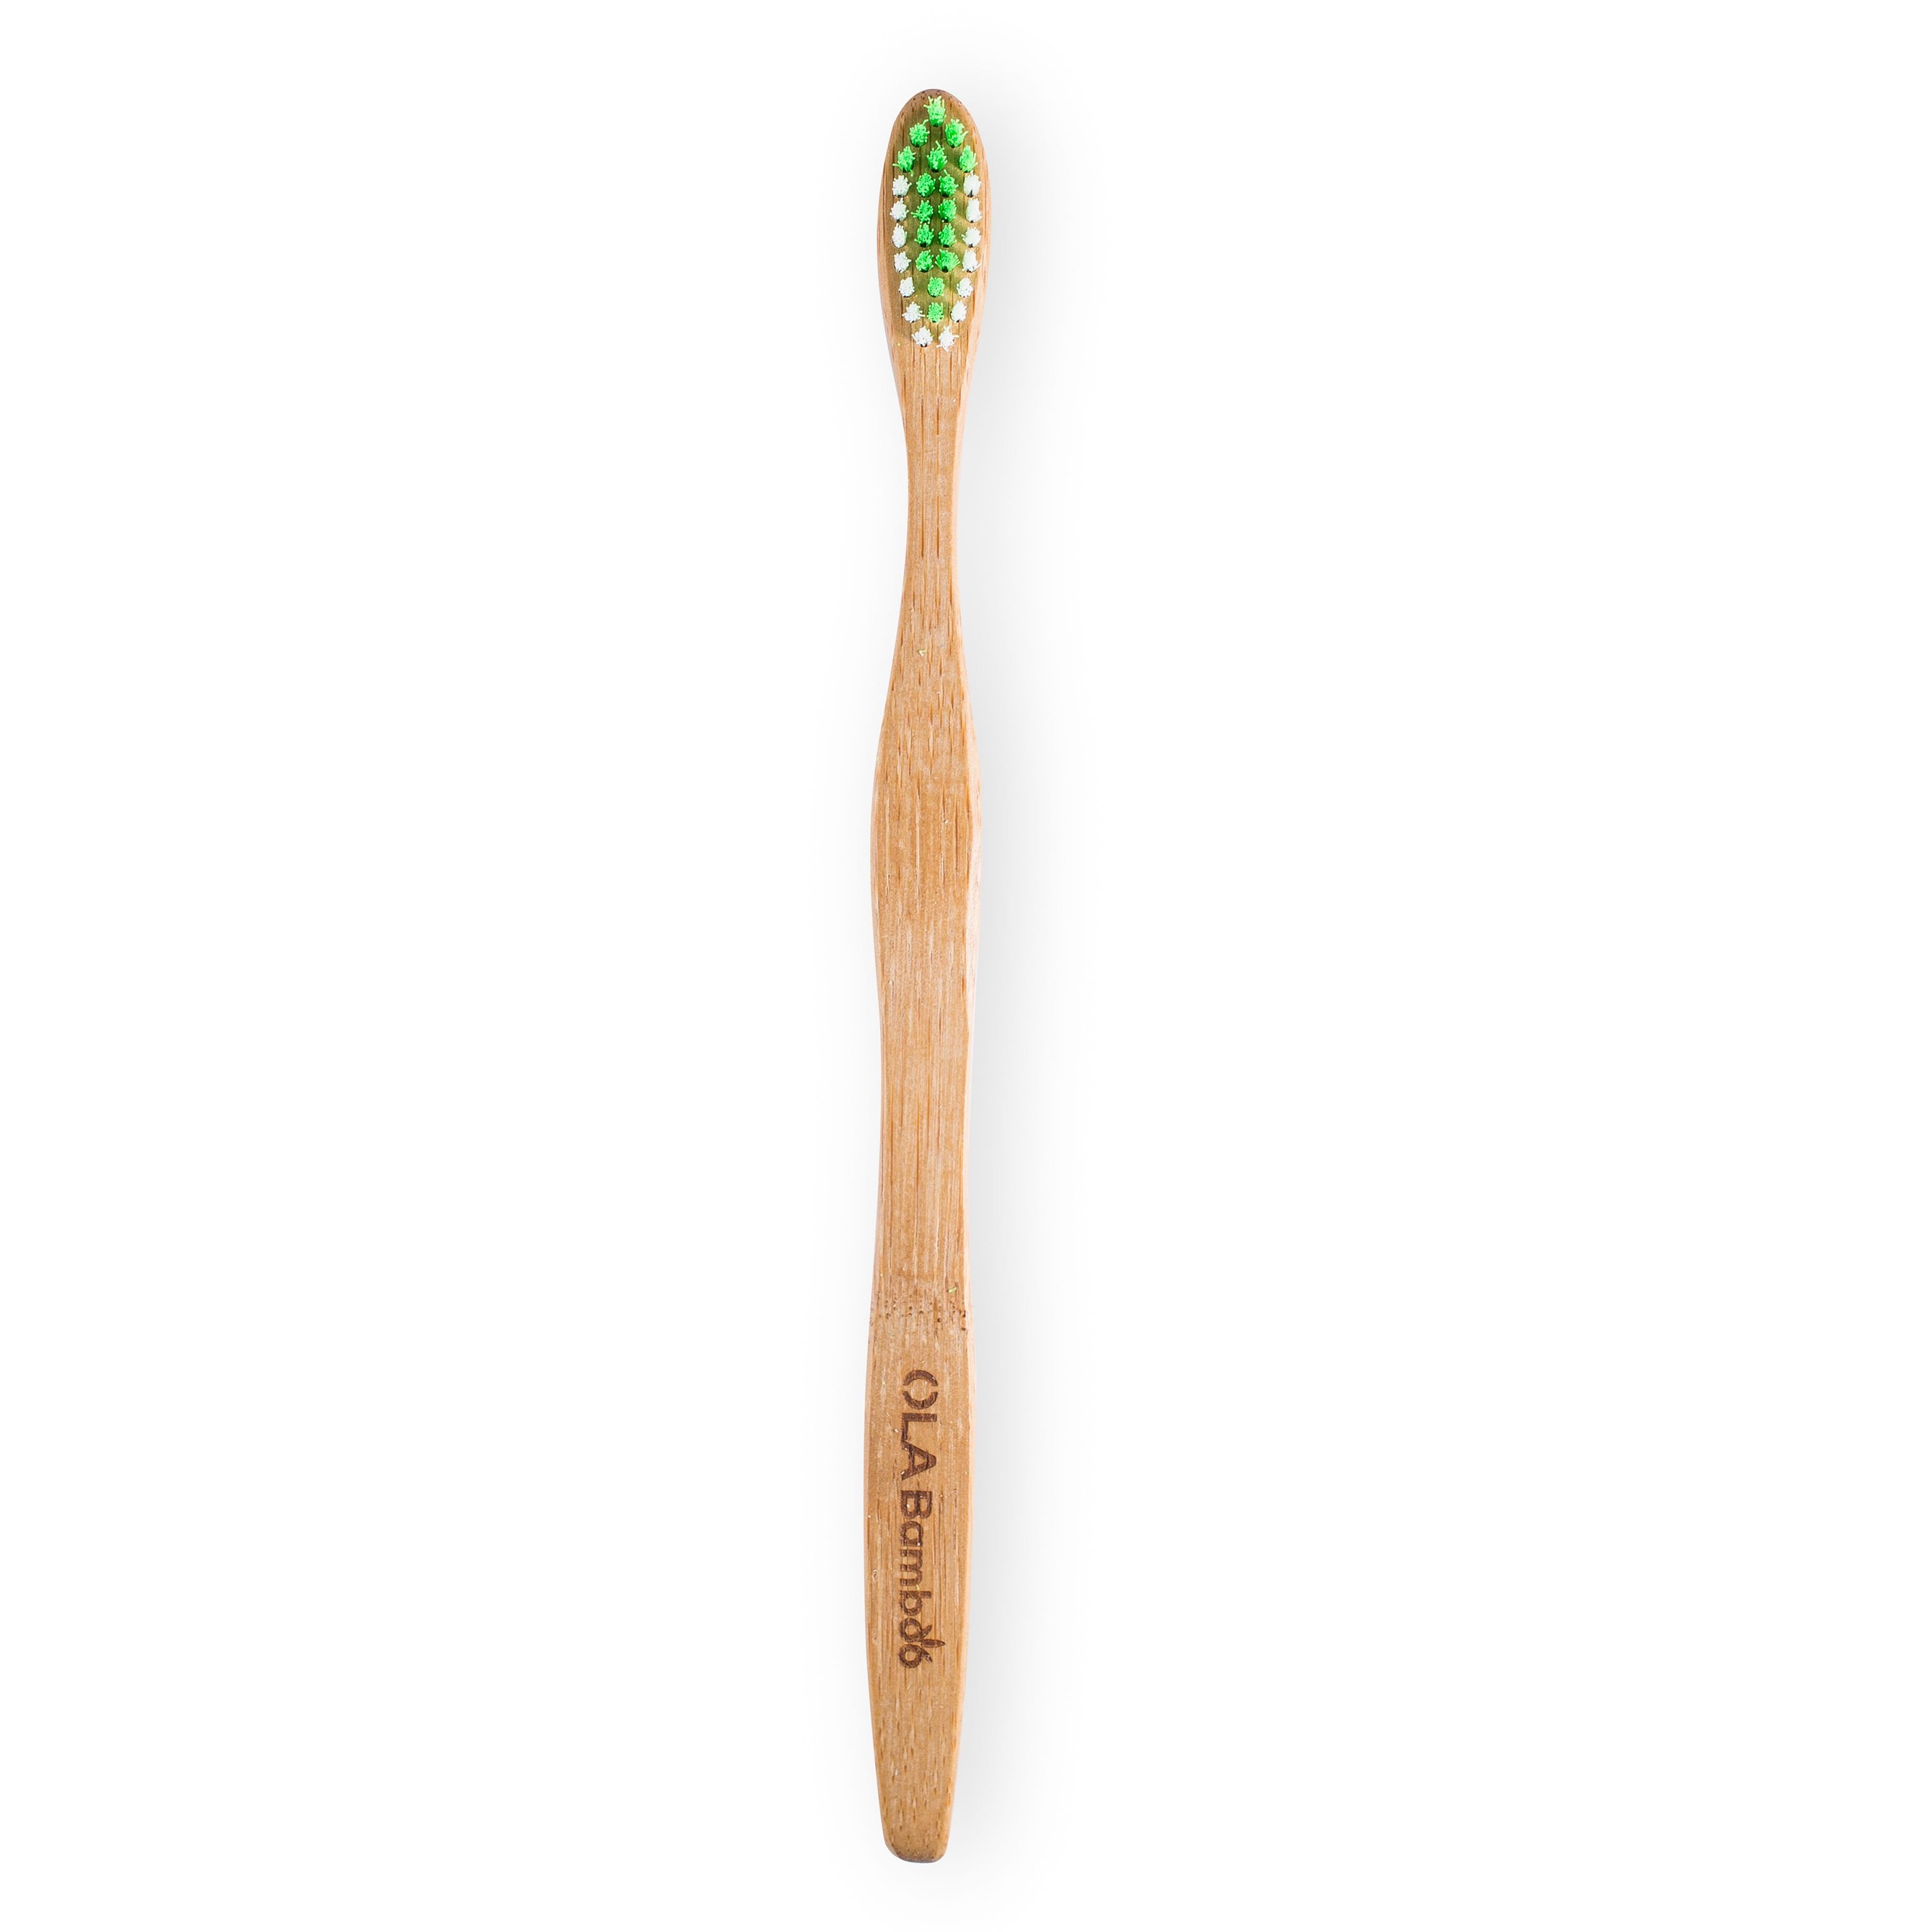 OLABamboo Toothbrush Ultra Soft Οδοντόβουρτσα Από 100% Μπαμπού Πολύ Μαλακή 1 Τεμάχιο – πράσινο